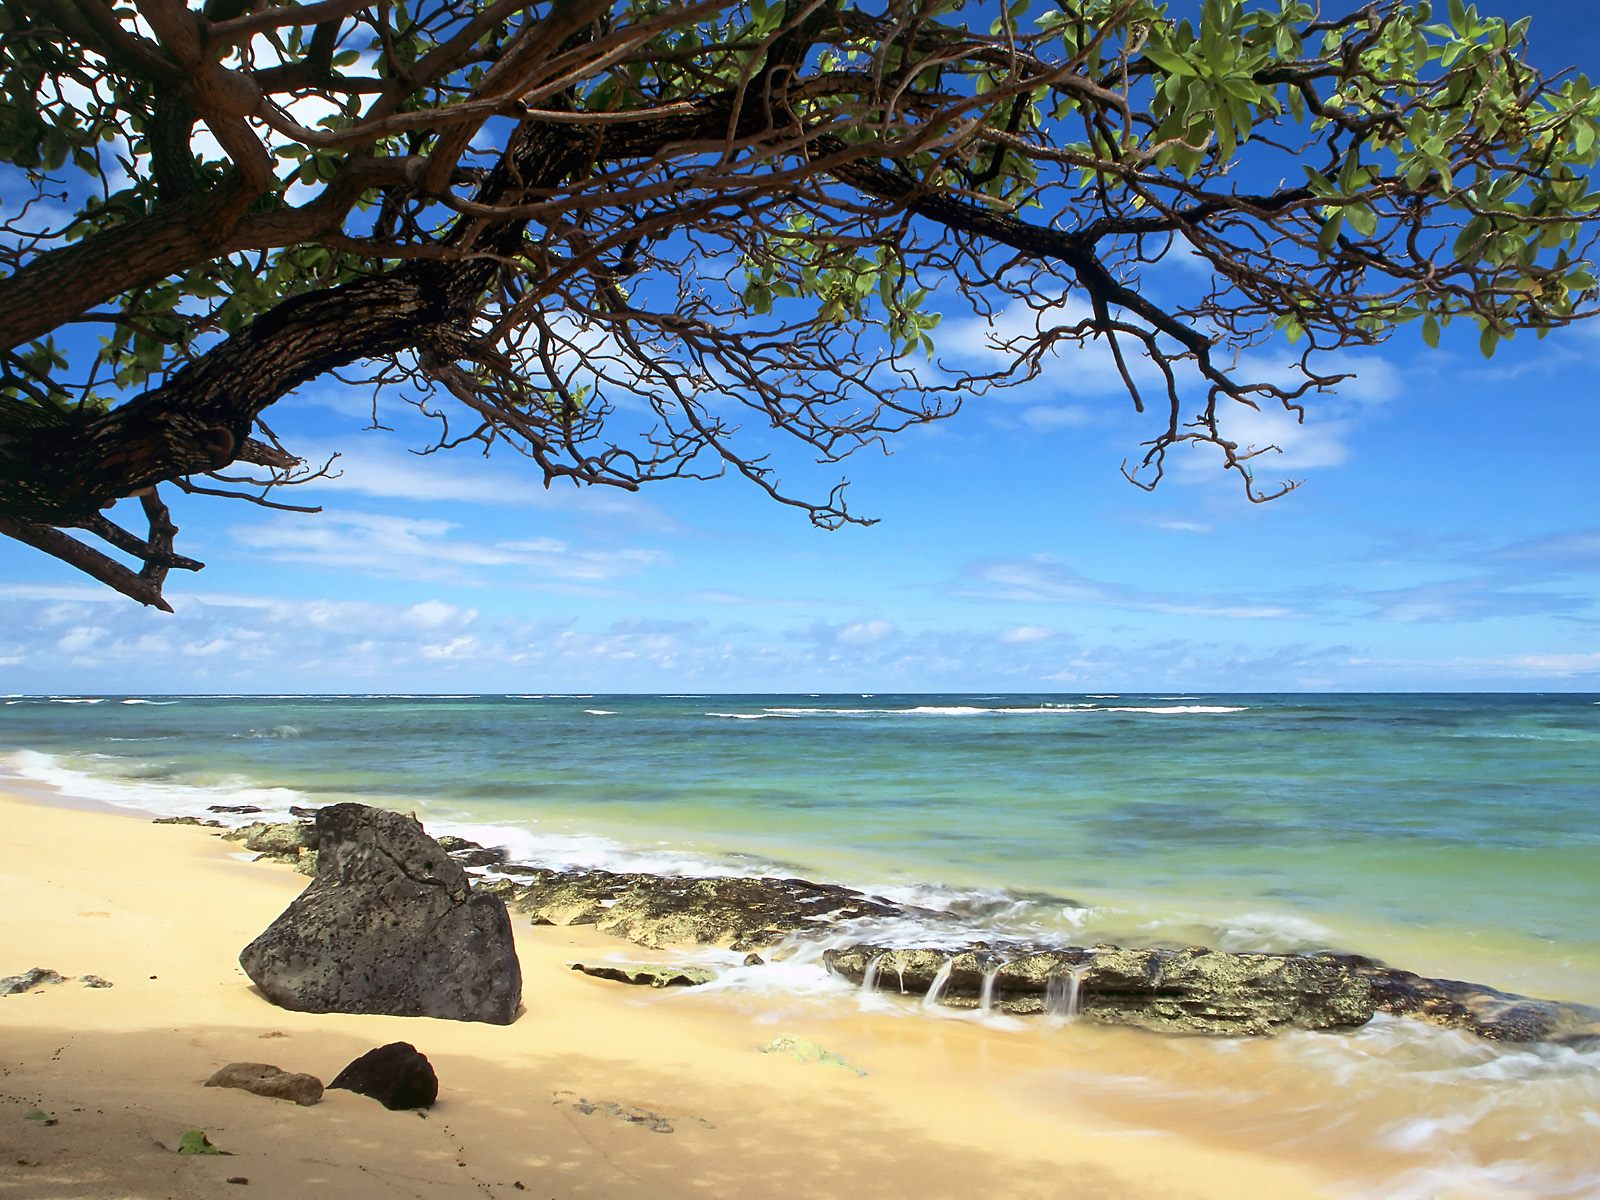 uk kanenelu beach oahu hawaii nature wallpaper image featuring beaches 1600x1200